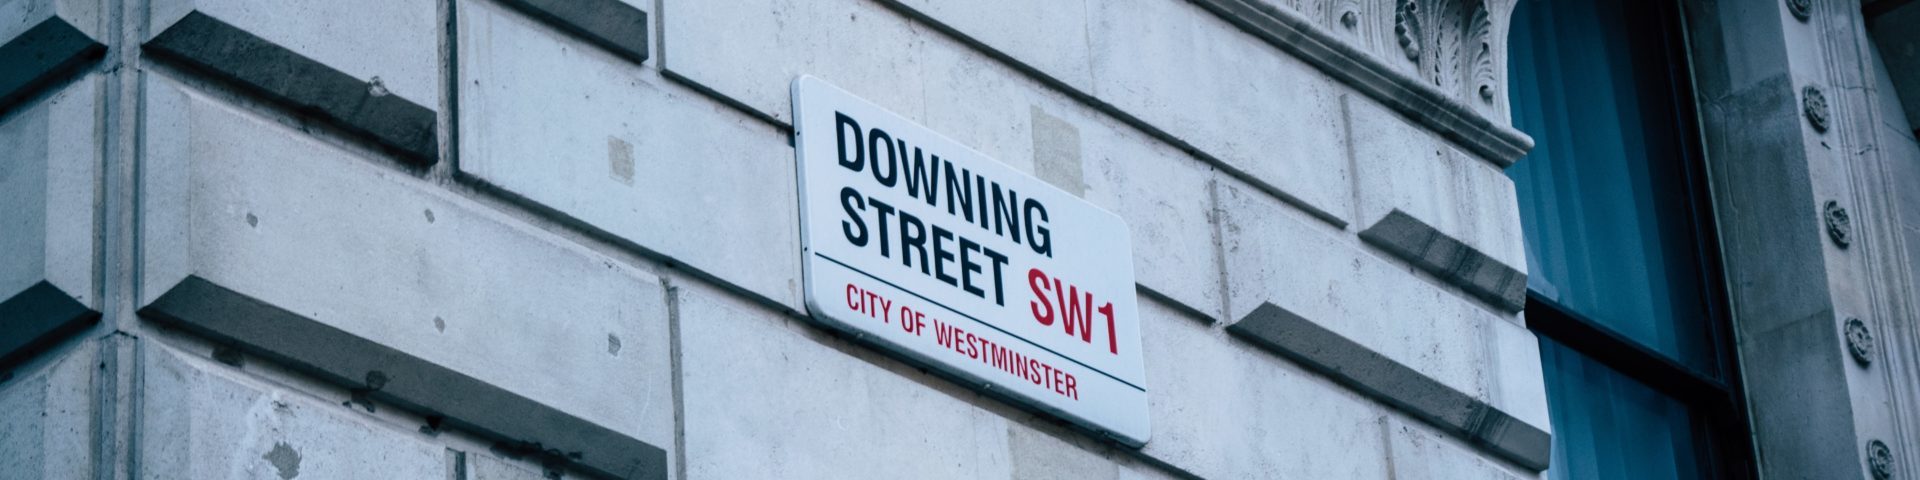 Downing Street Image